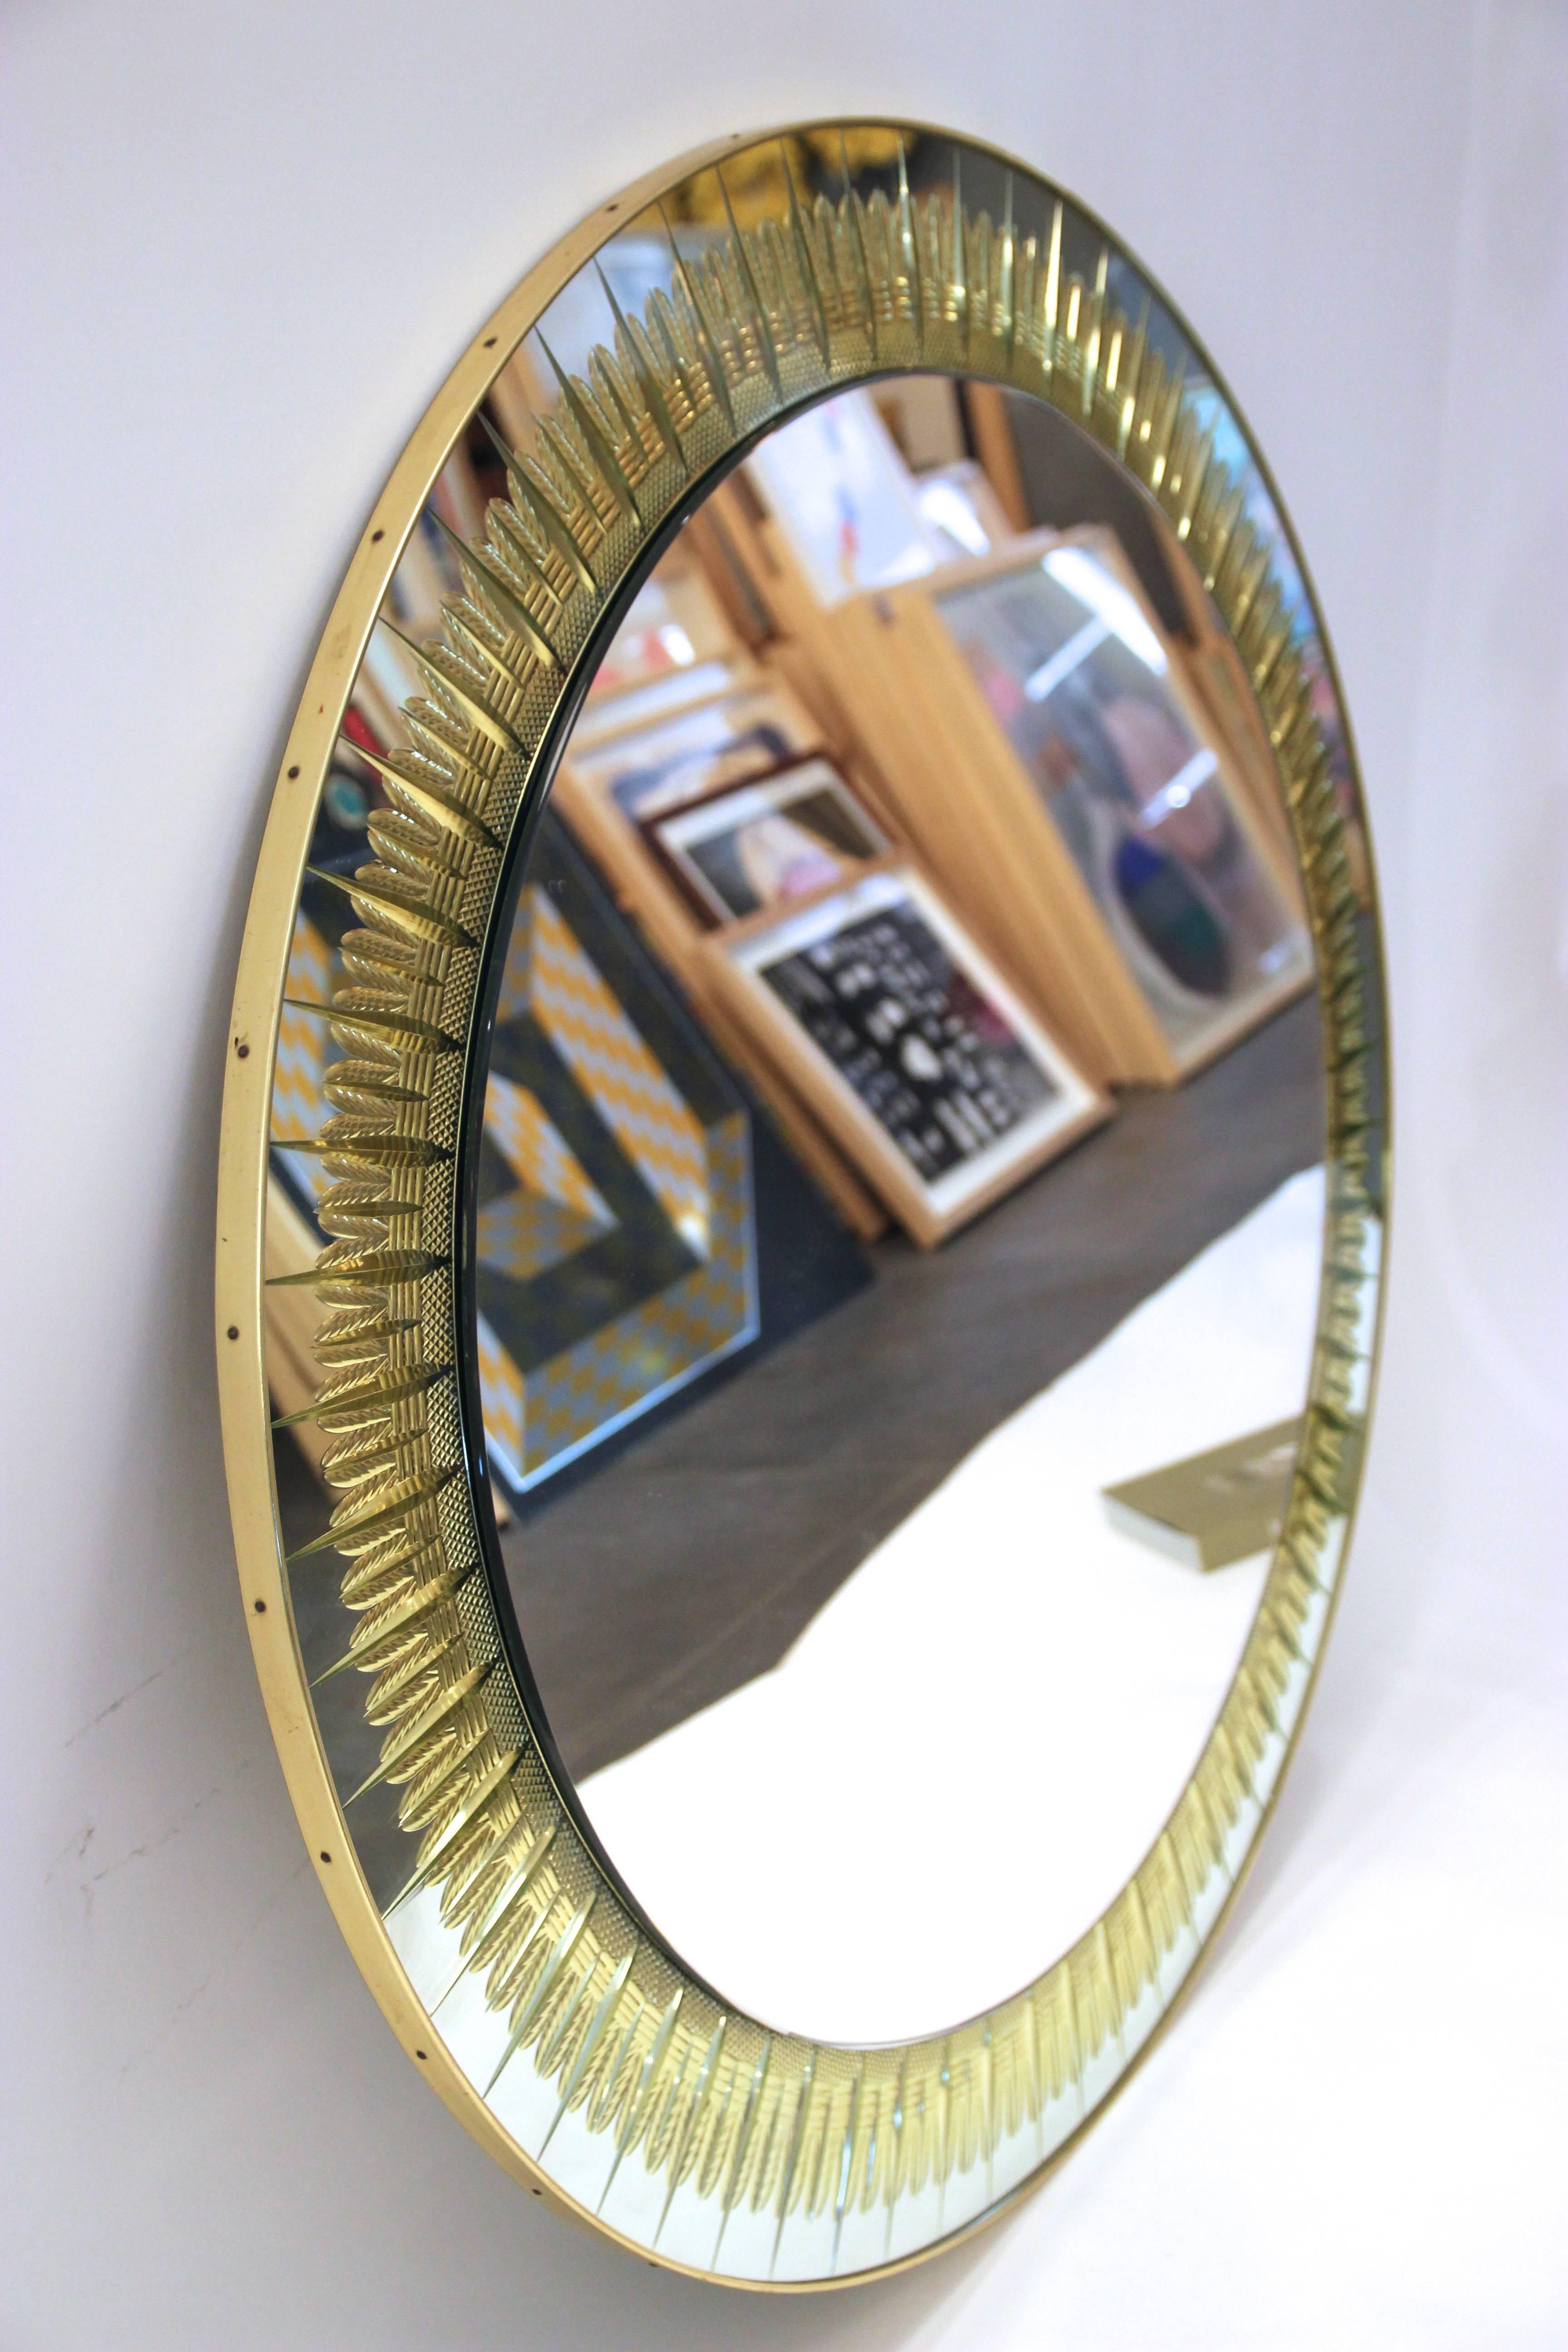 Cristal Art, round wall mirror.
Structure golden brass and decorative golden brass sheets,
circa 1970, Italy.
Measures: Height 98 cm, diameter 98 cm, depth 2cm.